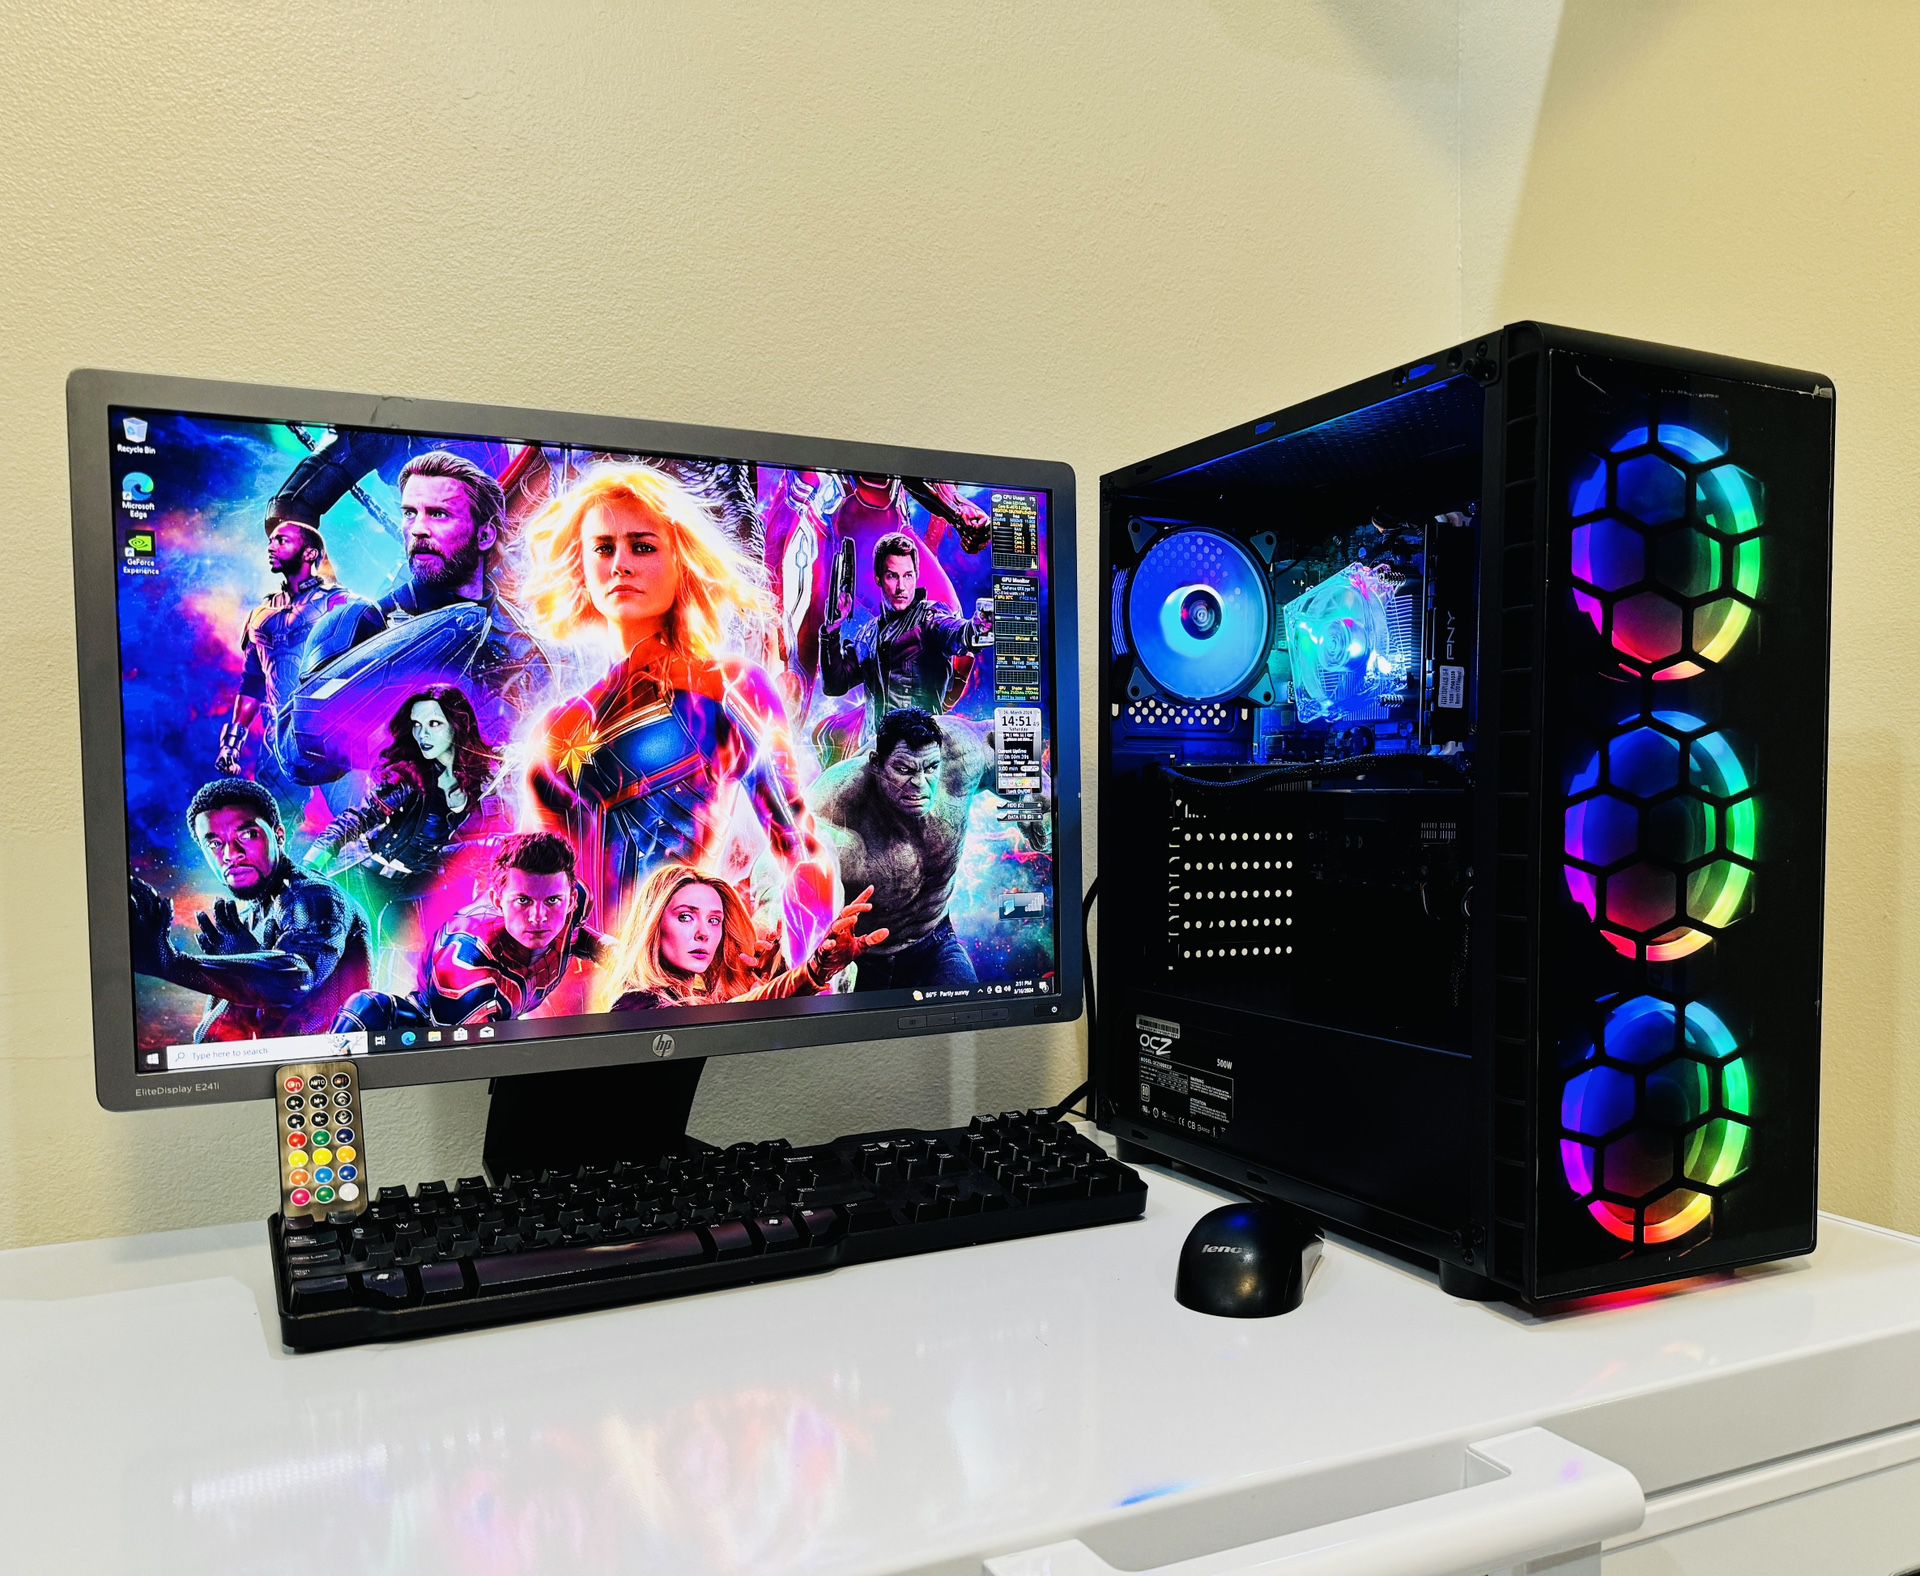 NEW LENOVO Gaming PC 4 Core I5 @3,2GHz. GPU Nvidia GTX 750TI 2G. 120G SSD/1TB HDD, 12G RAM. WIFI. USB 3,0, 500W  80+ PSU. 24” Monit/Keyb,Mou. Win10 P